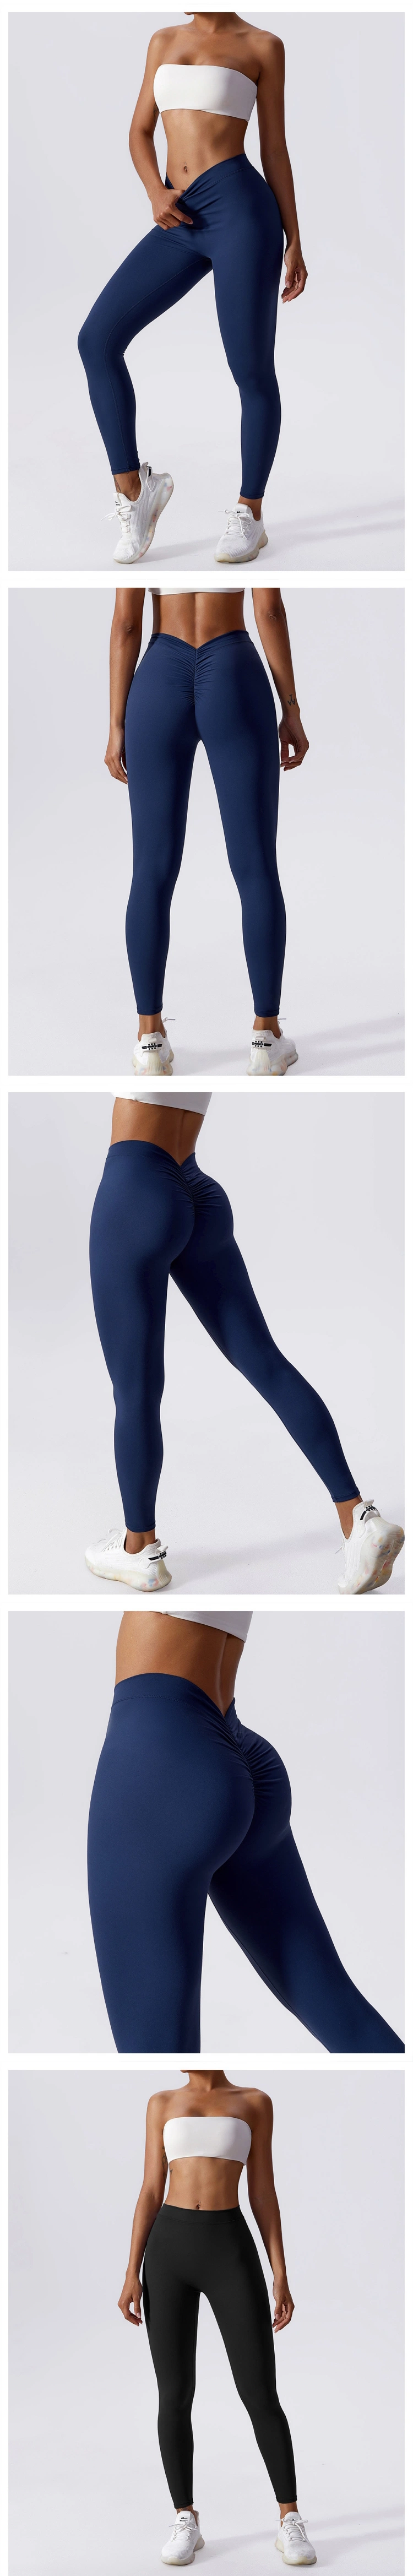 2023new Wholesale Hot Women Scrunch Butt Back V-Cut High Waisted Tummy Control Yoga Leggings Sports Fitness Gym Workout Leggings